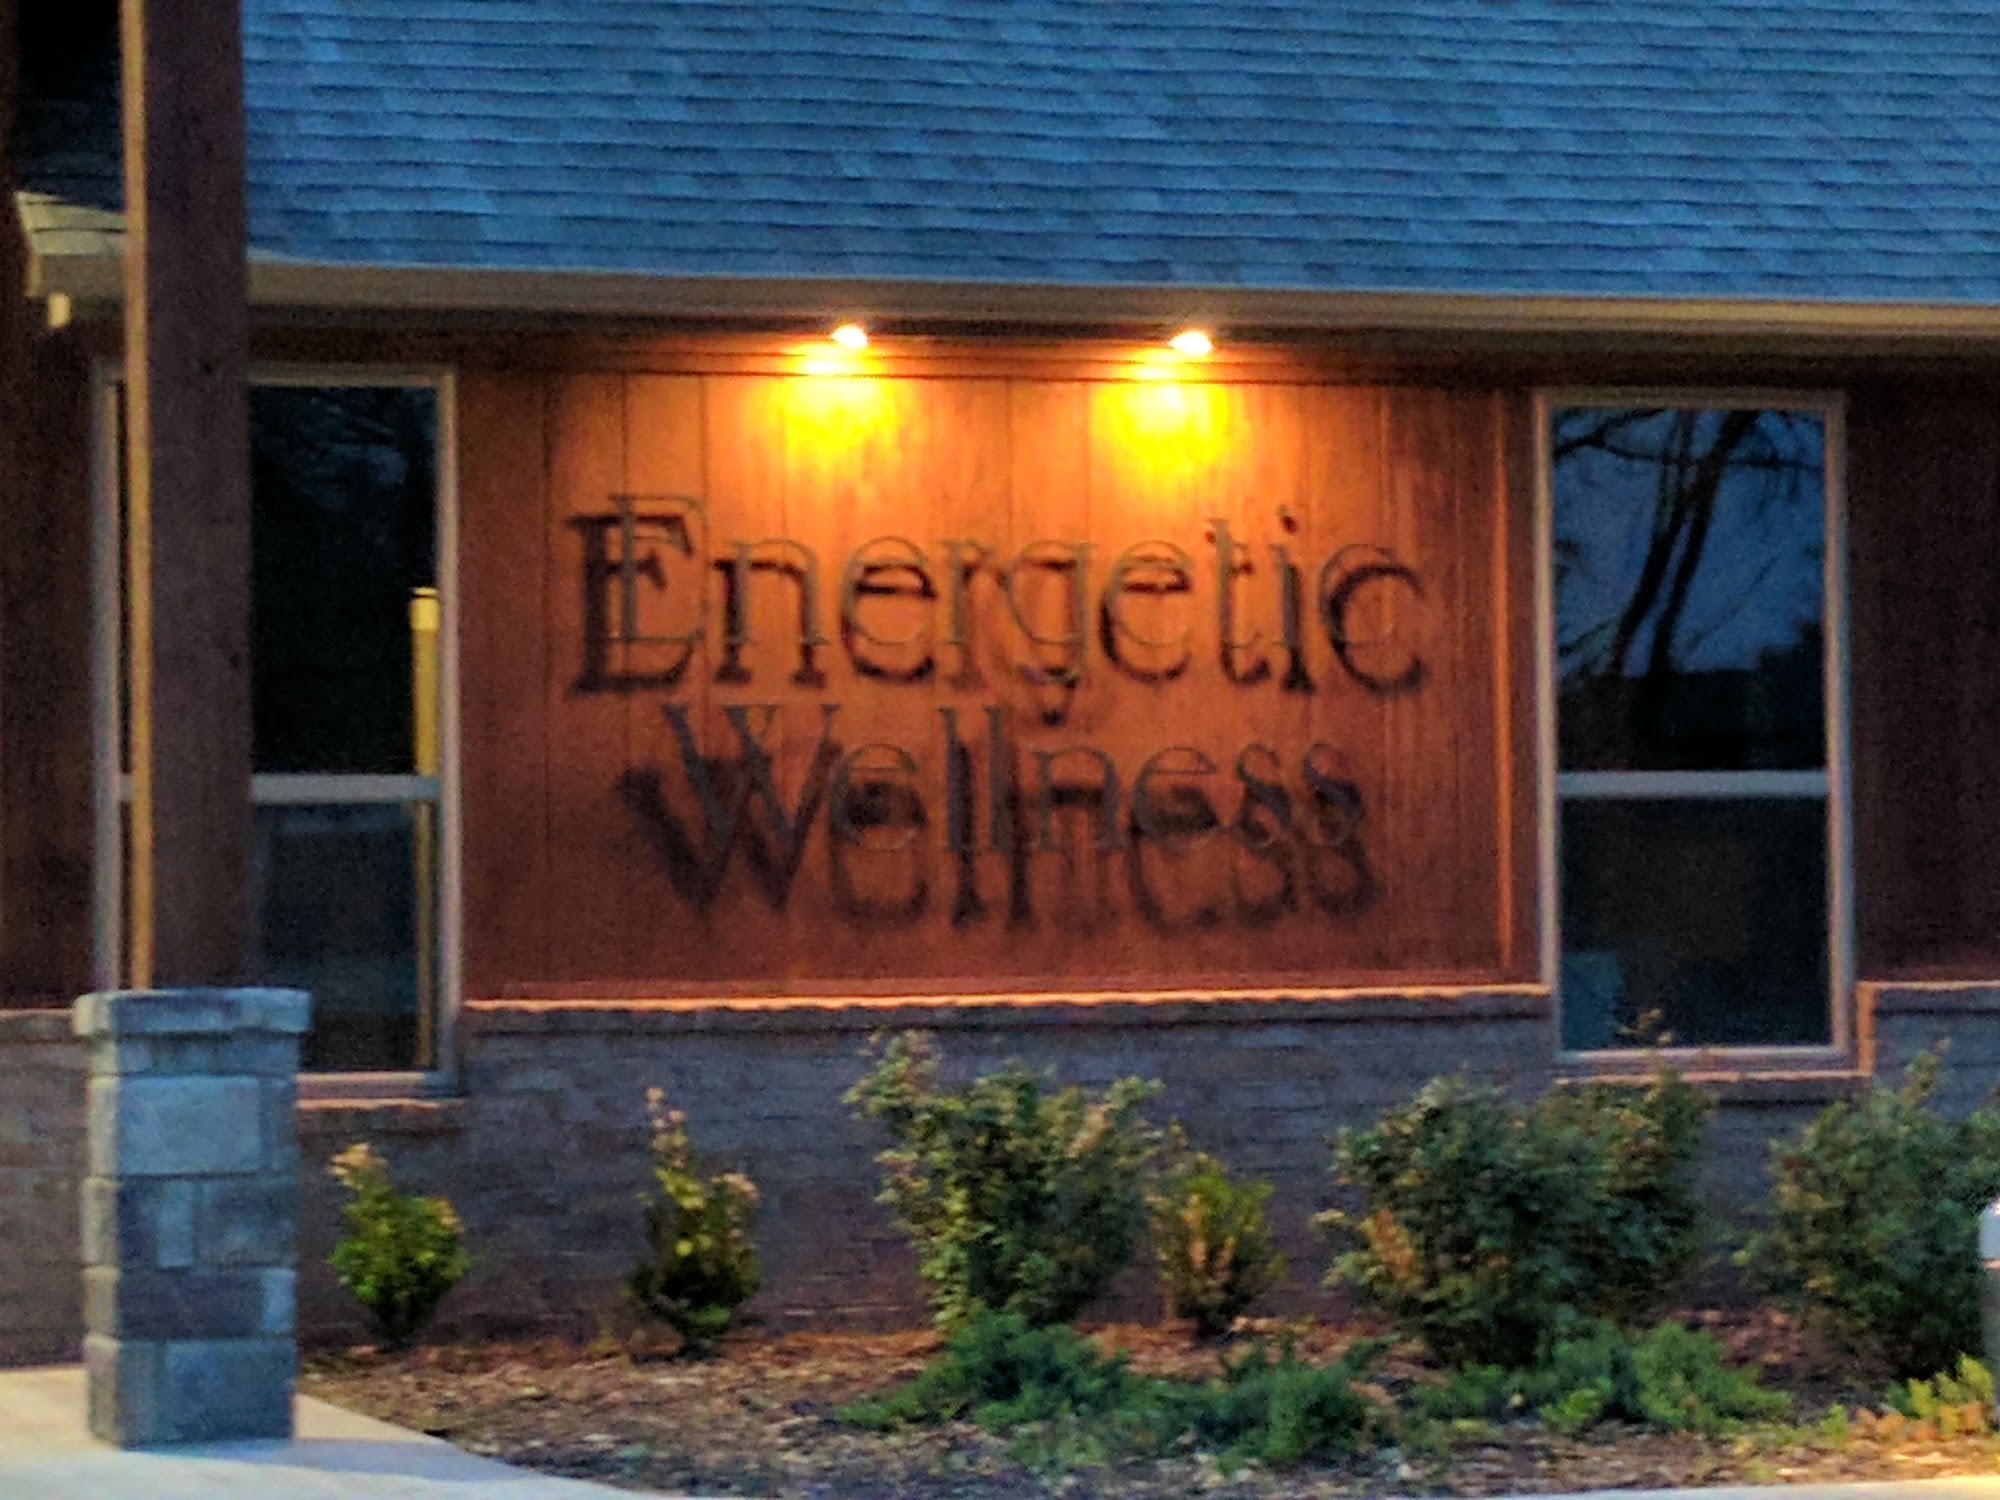 Energetic Wellness